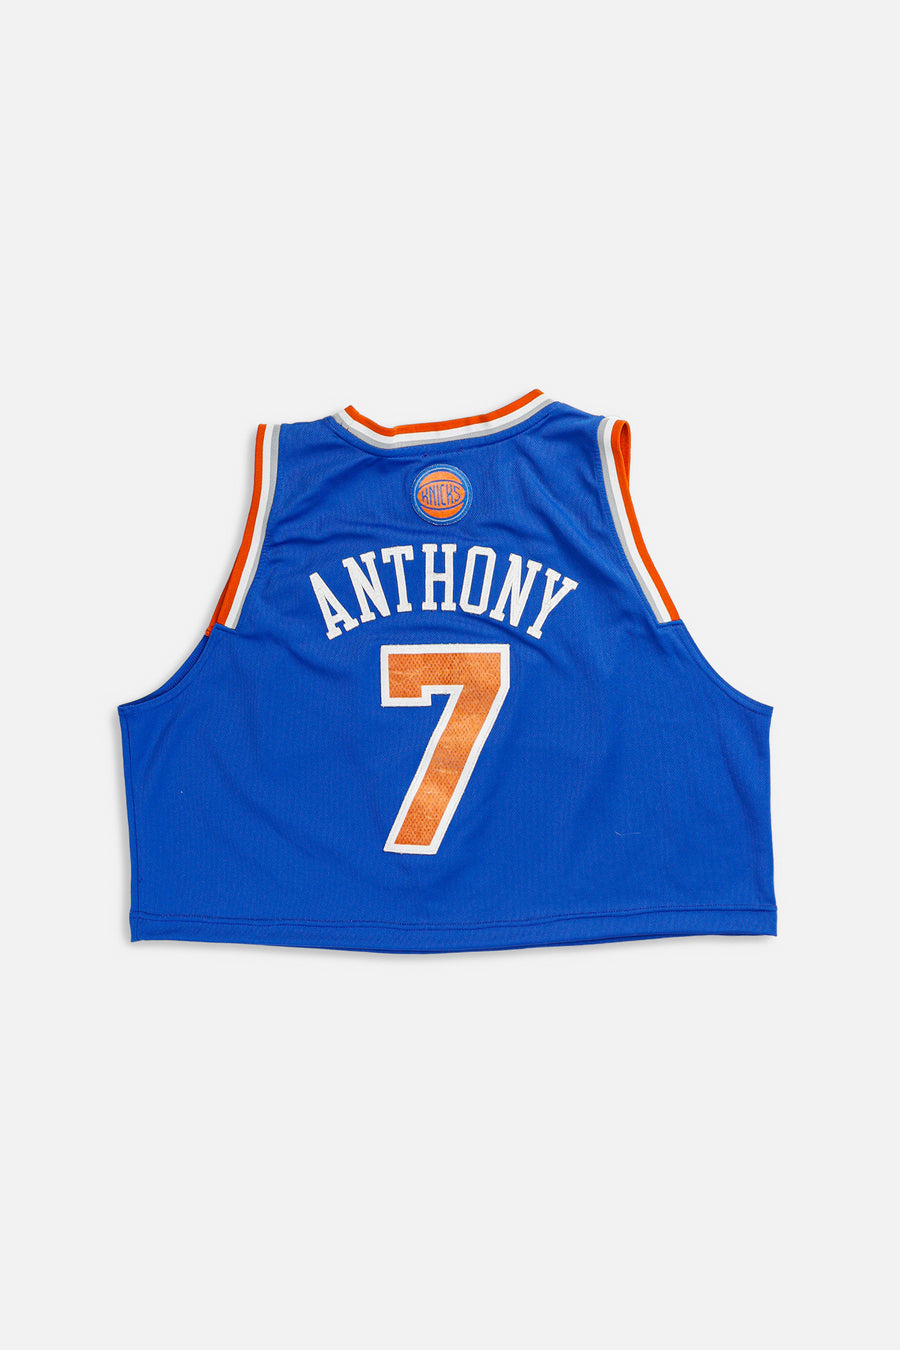 Rework New York Knicks NBA Crop Jersey - S